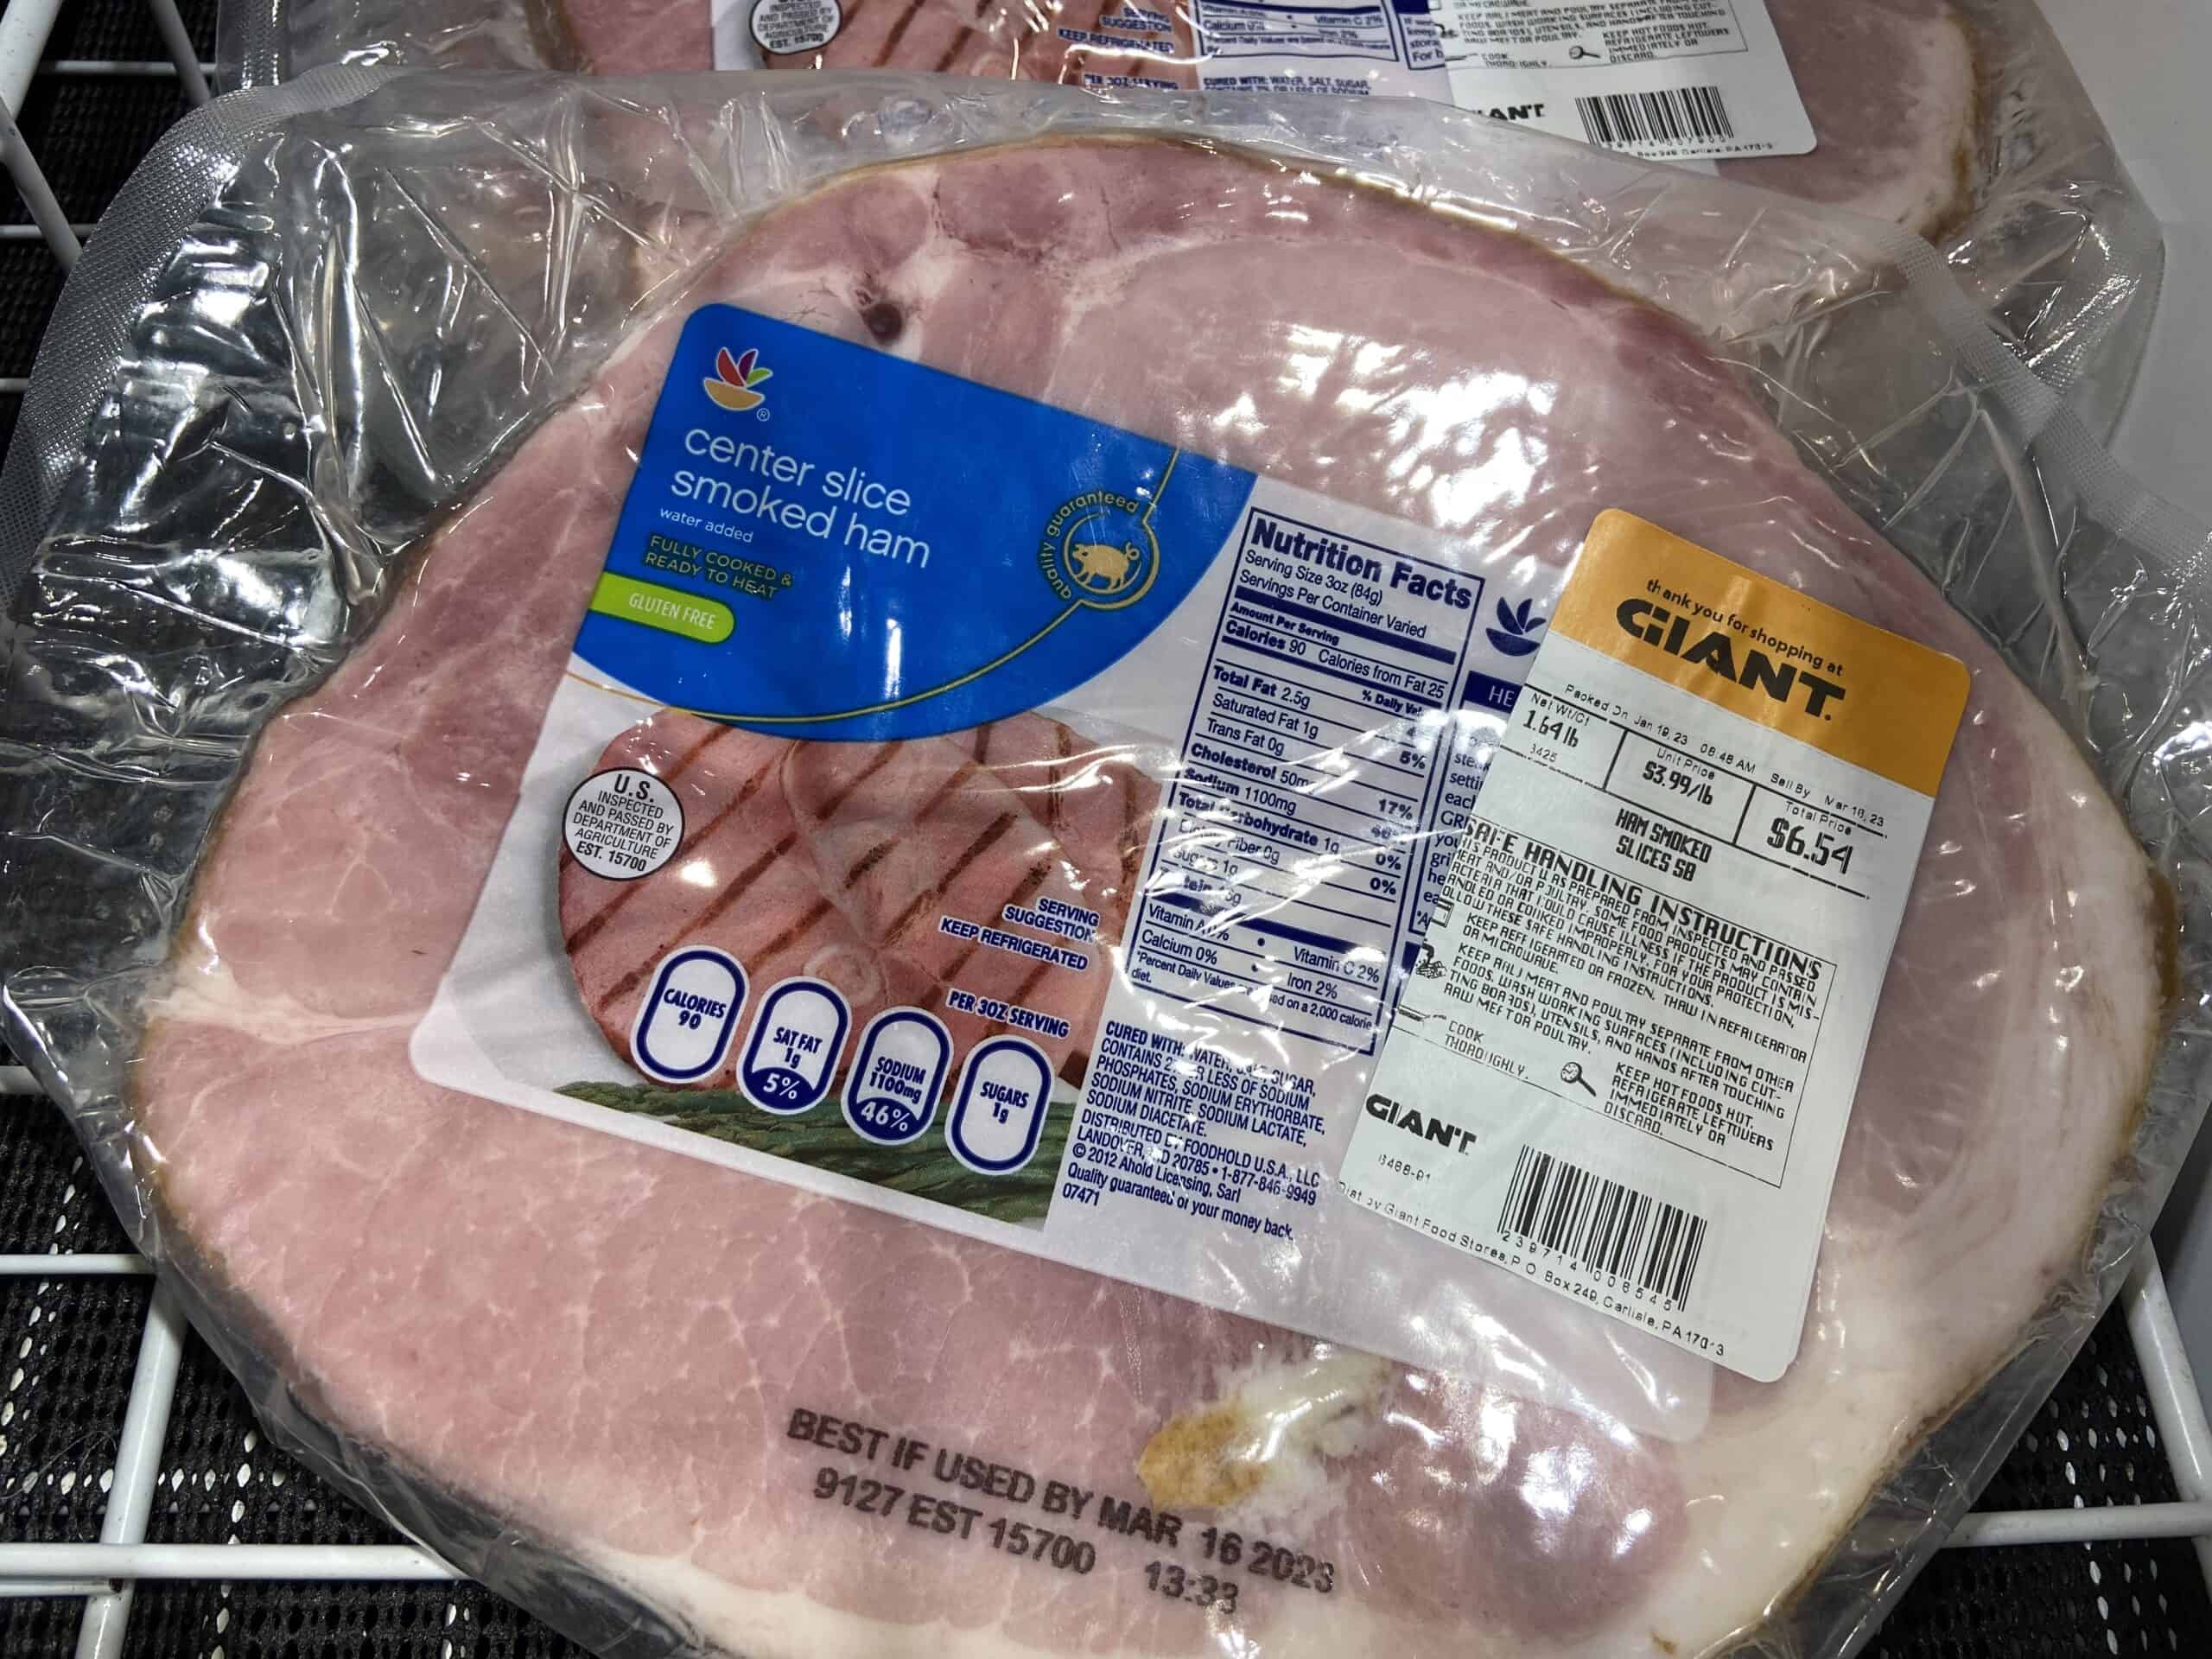 Giant-Deal-on-Giant-Brand-Smoked-Ham-Steak